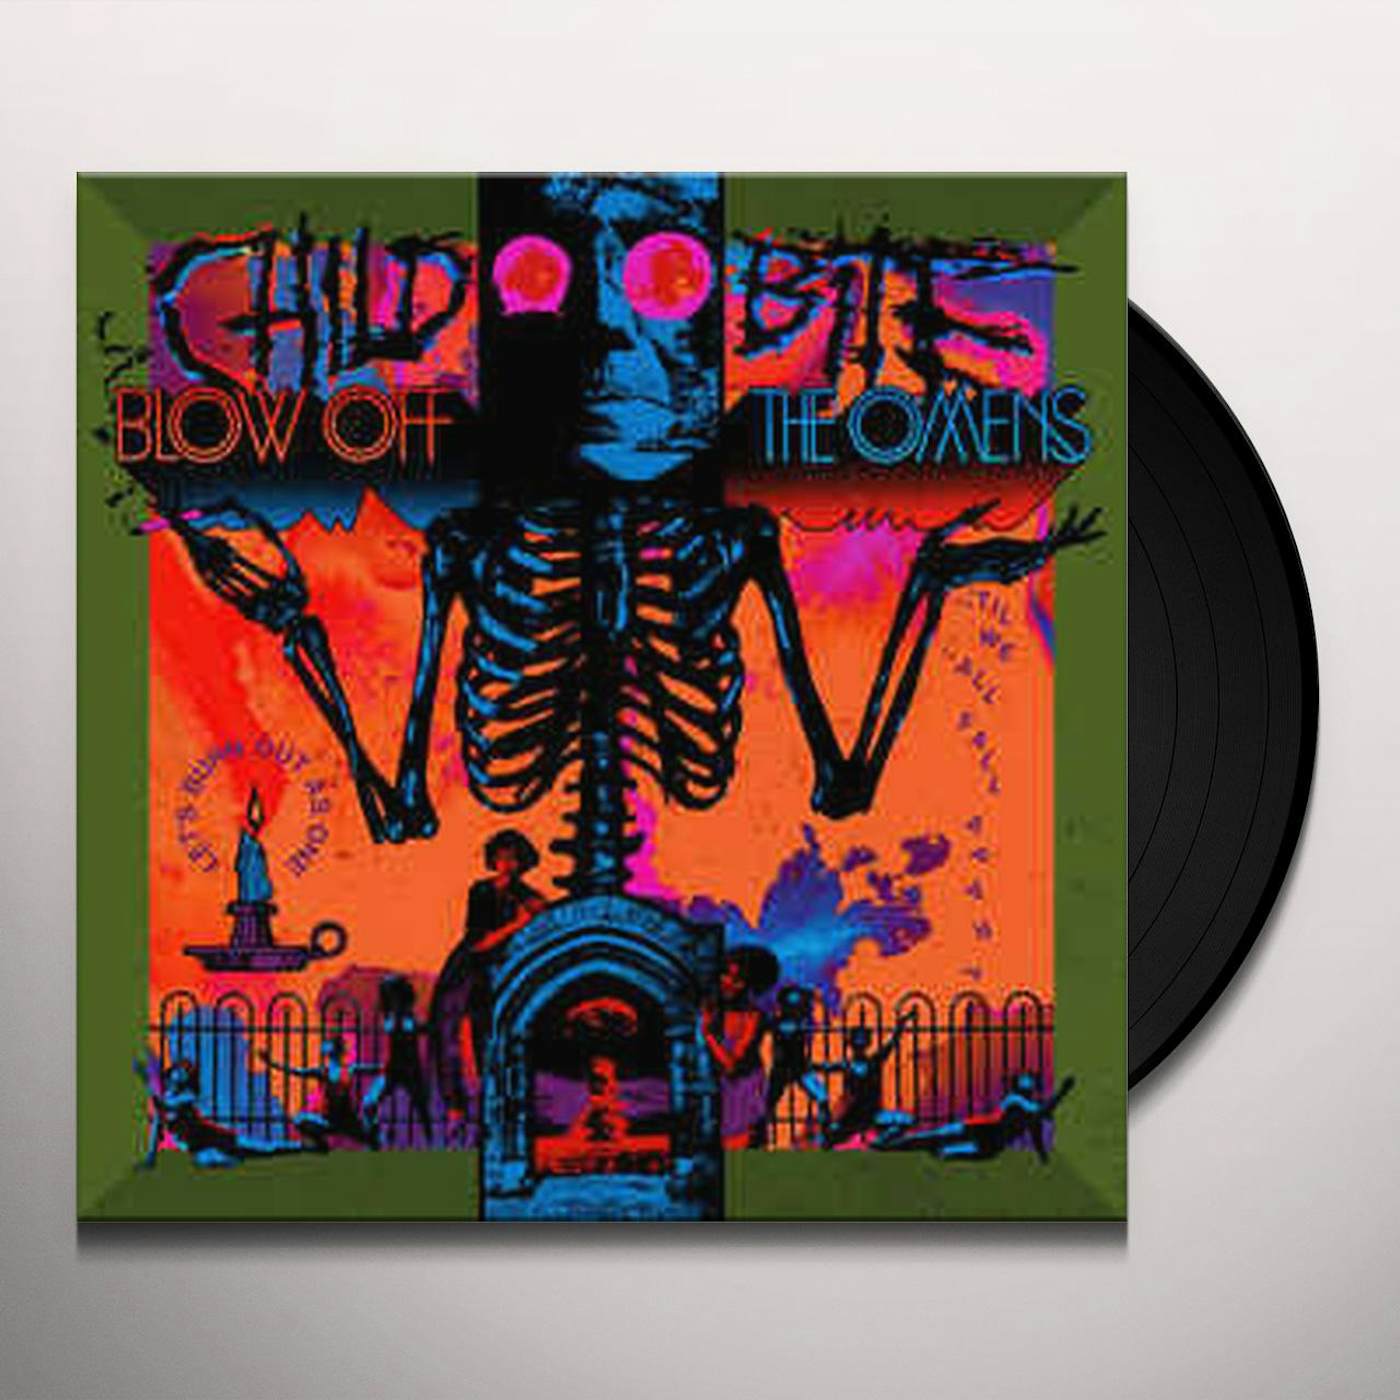 Child Bite Blow off the Omens Vinyl Record